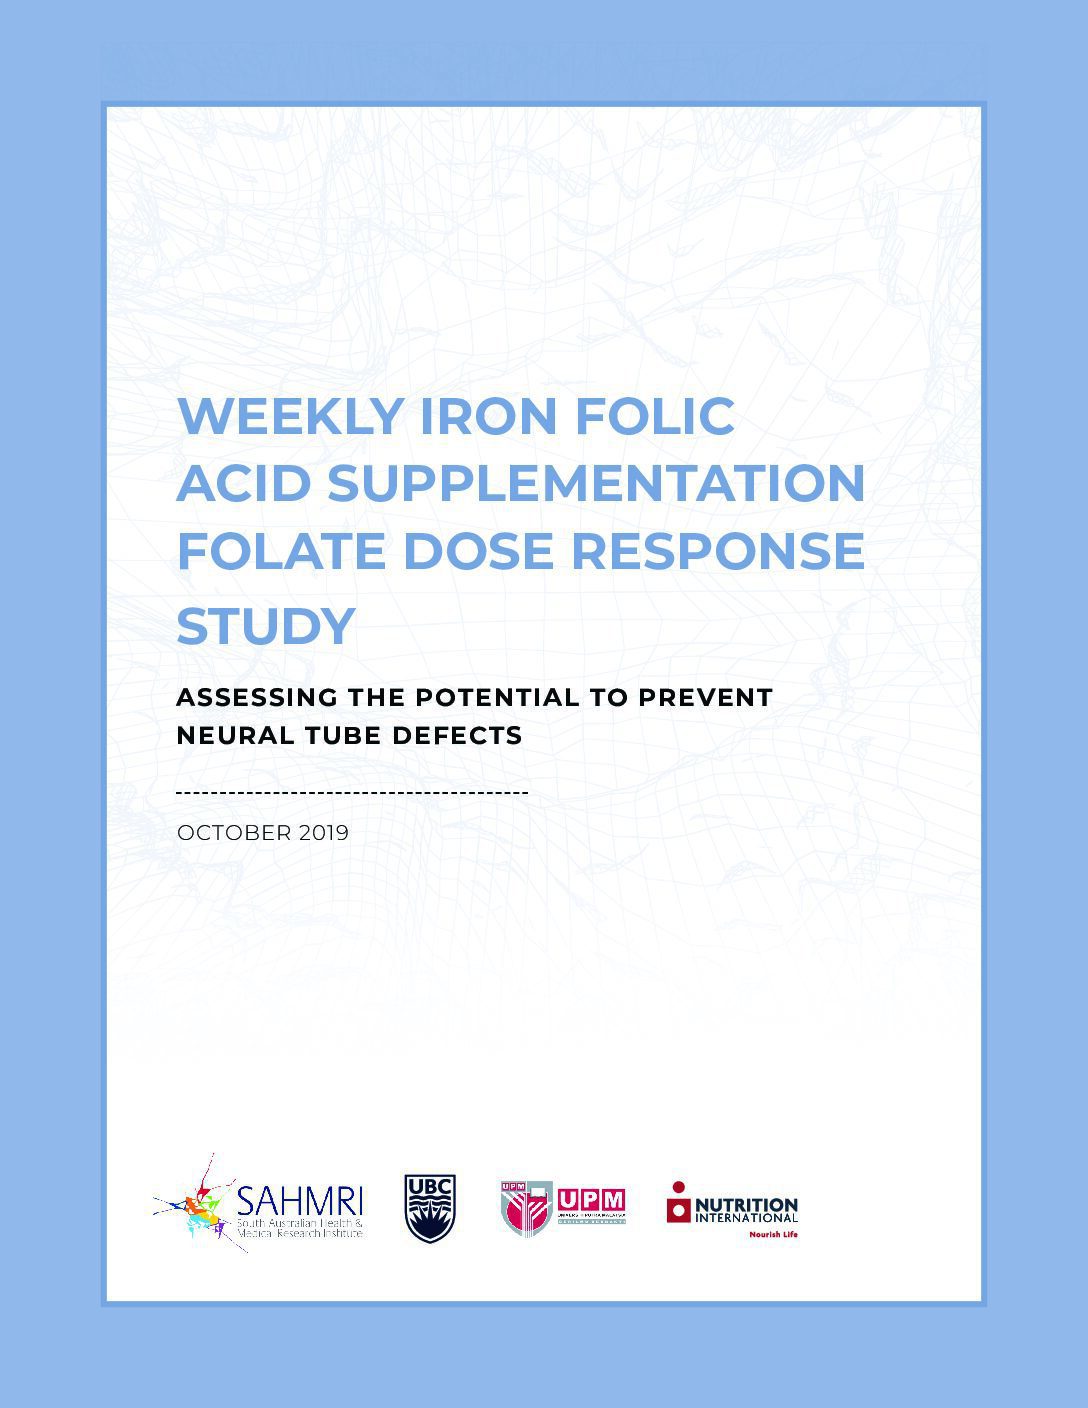 Weekly iron folic acid supplementation folate dose response study-protocol thumbnail